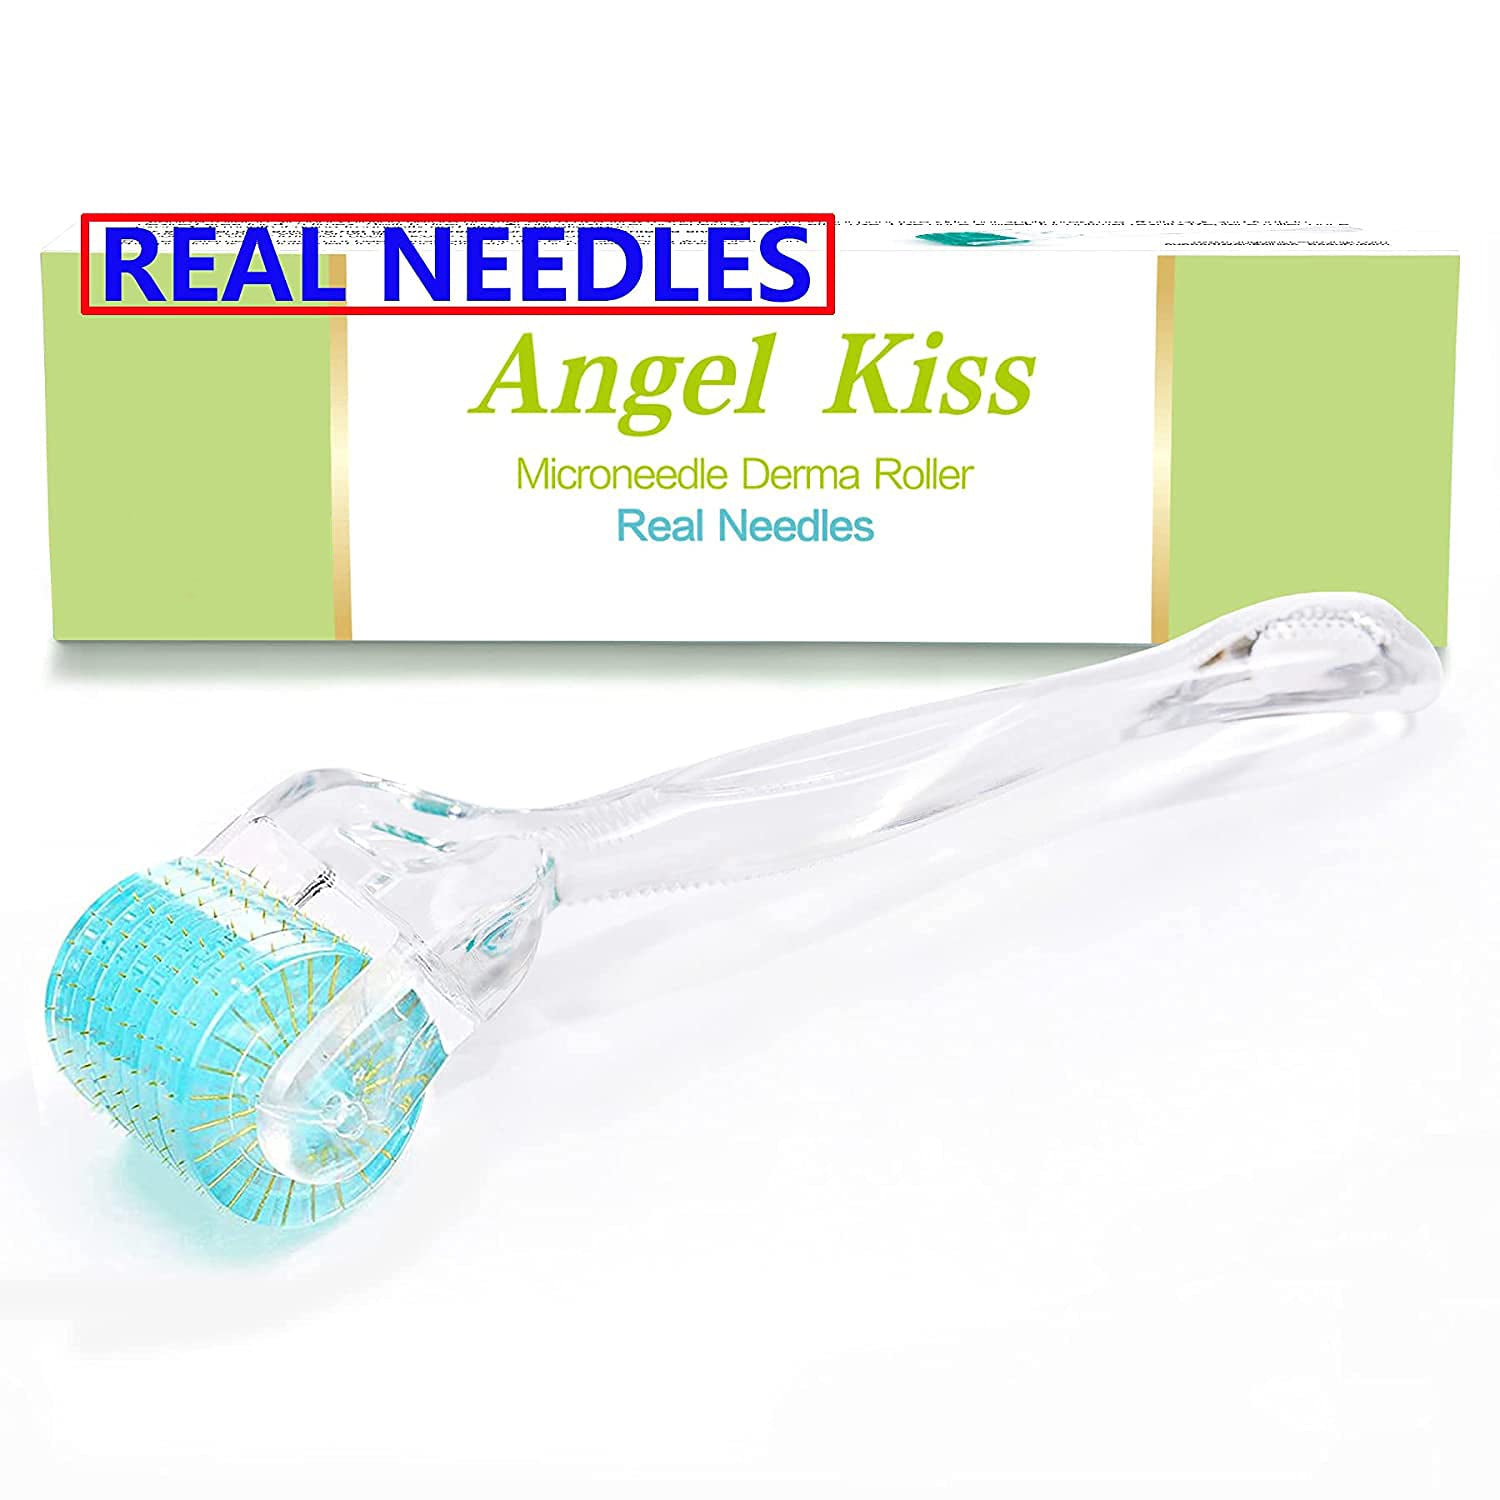 192 Real Needle Microneedling Derma Roller - Titanium Needles